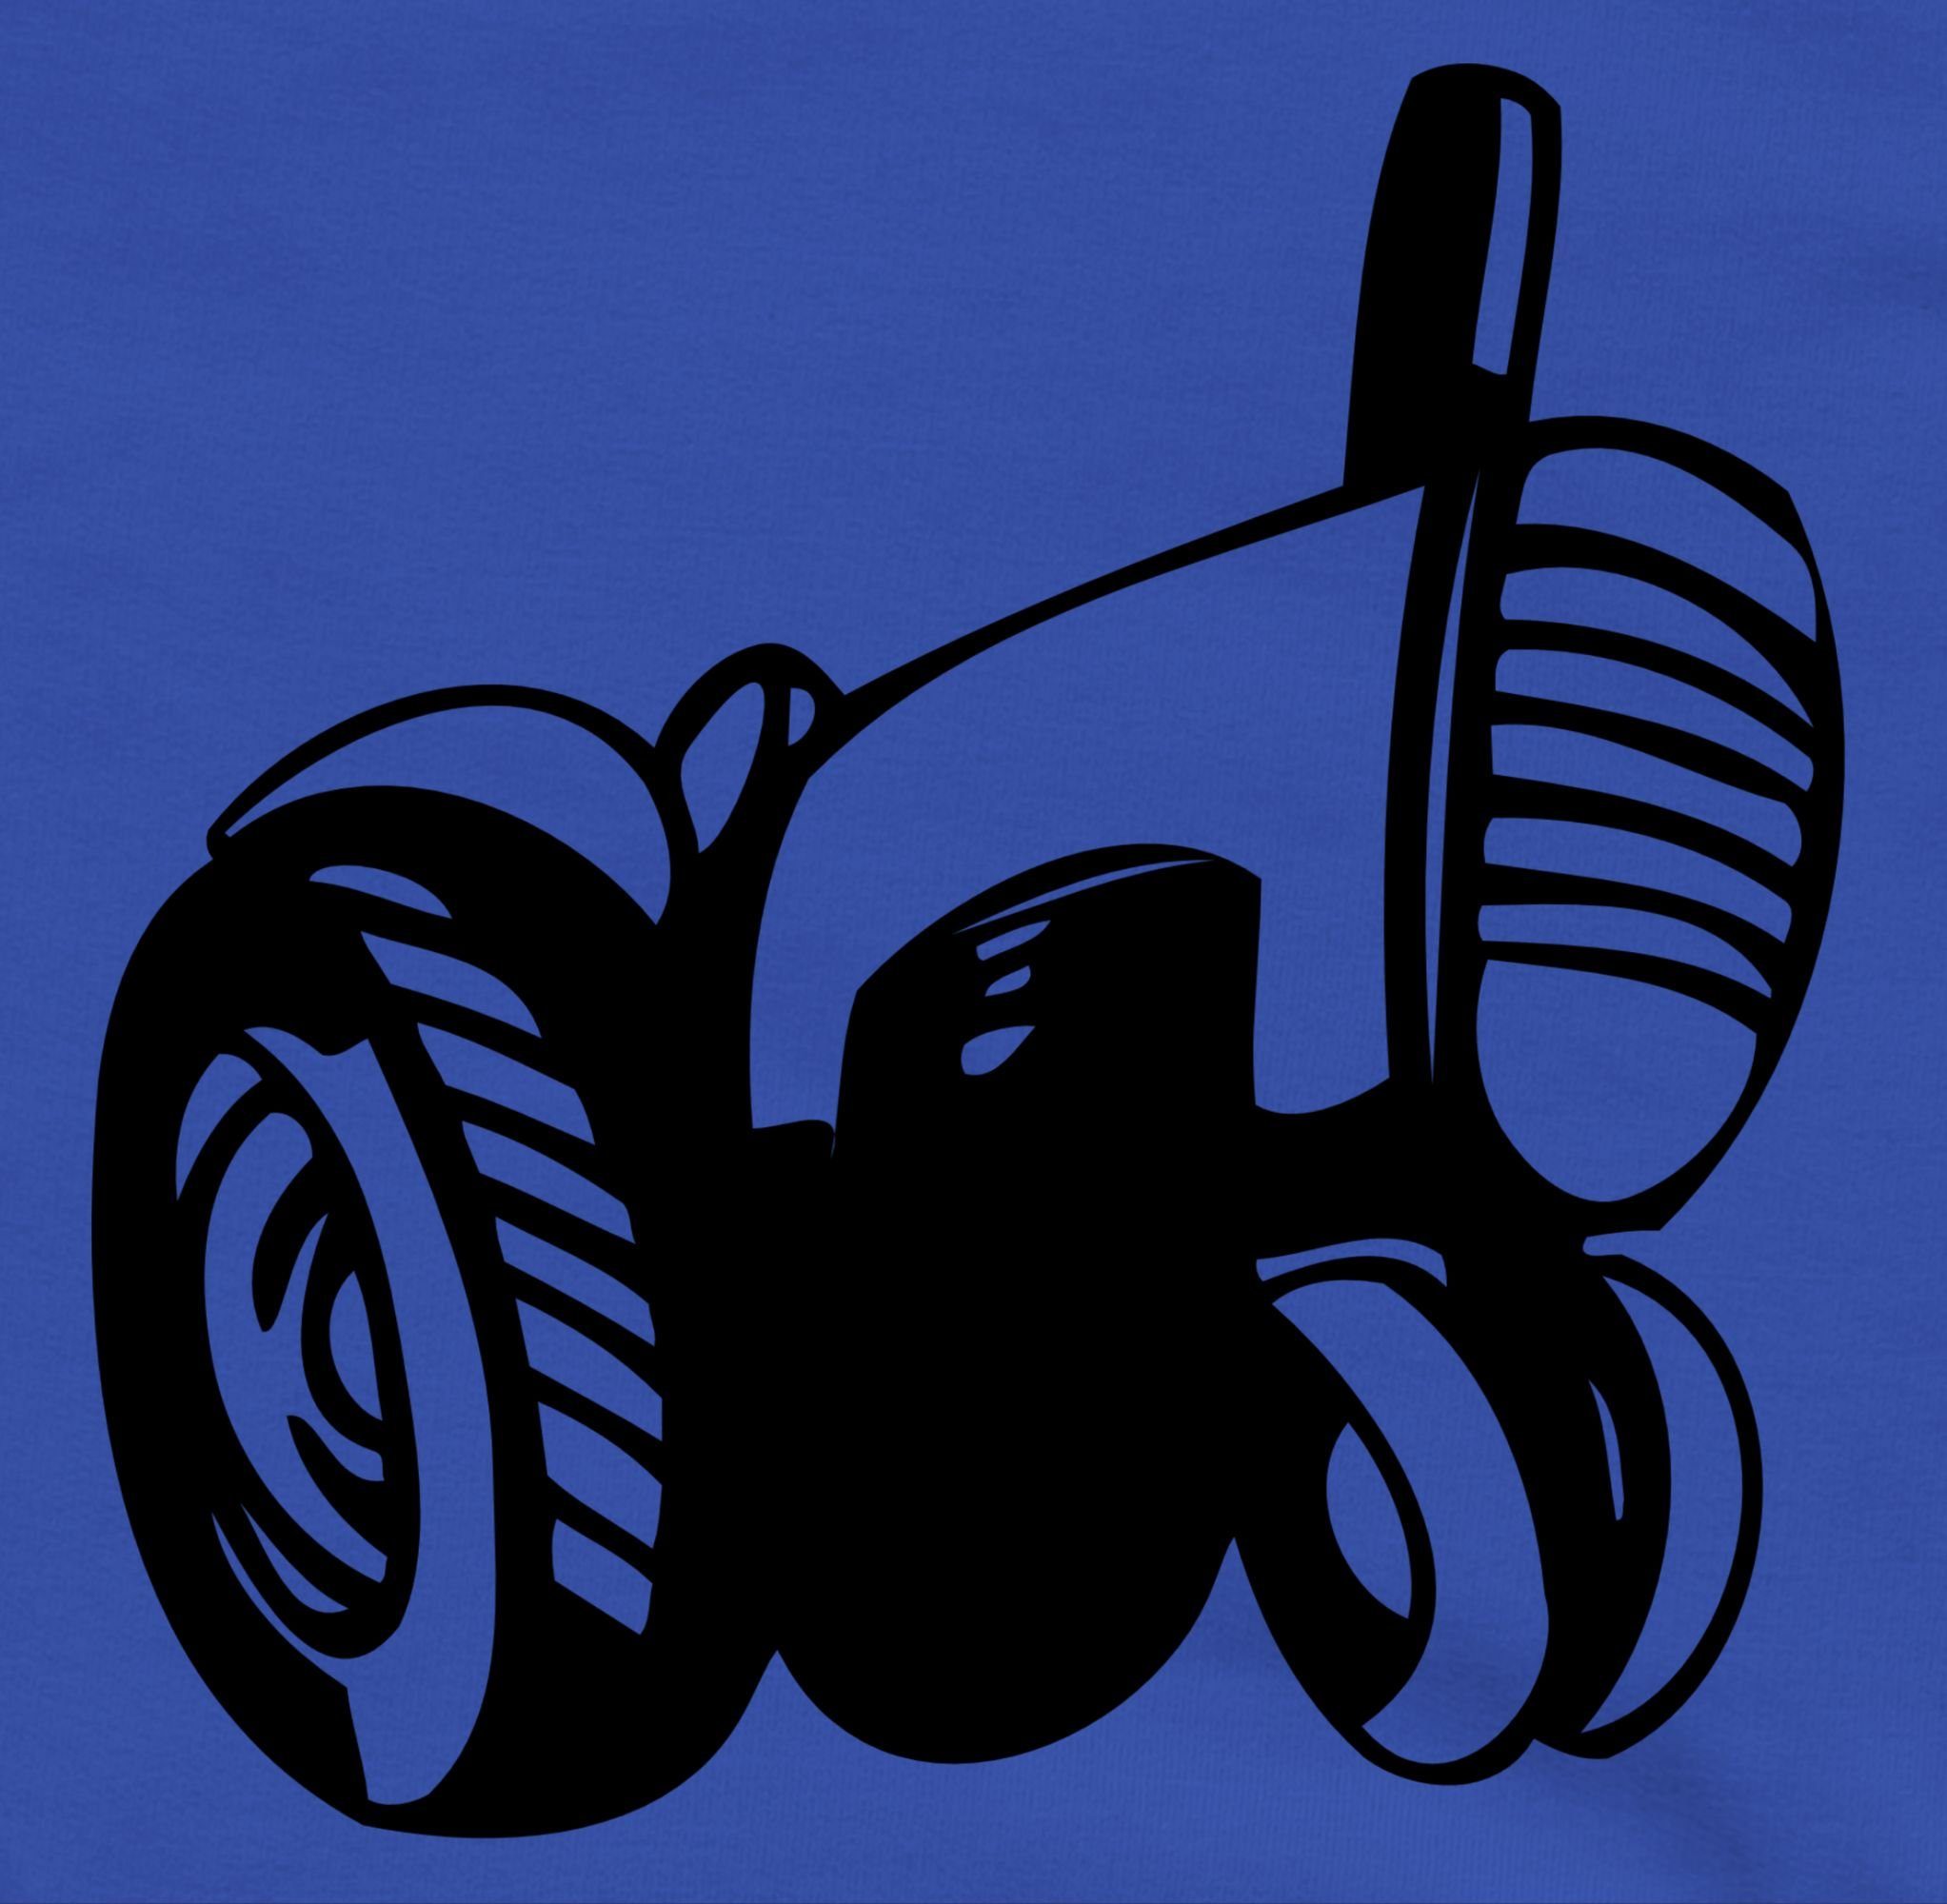 Royalblau Traktor Traktor Sweatshirt 1 Silhouette Shirtracer